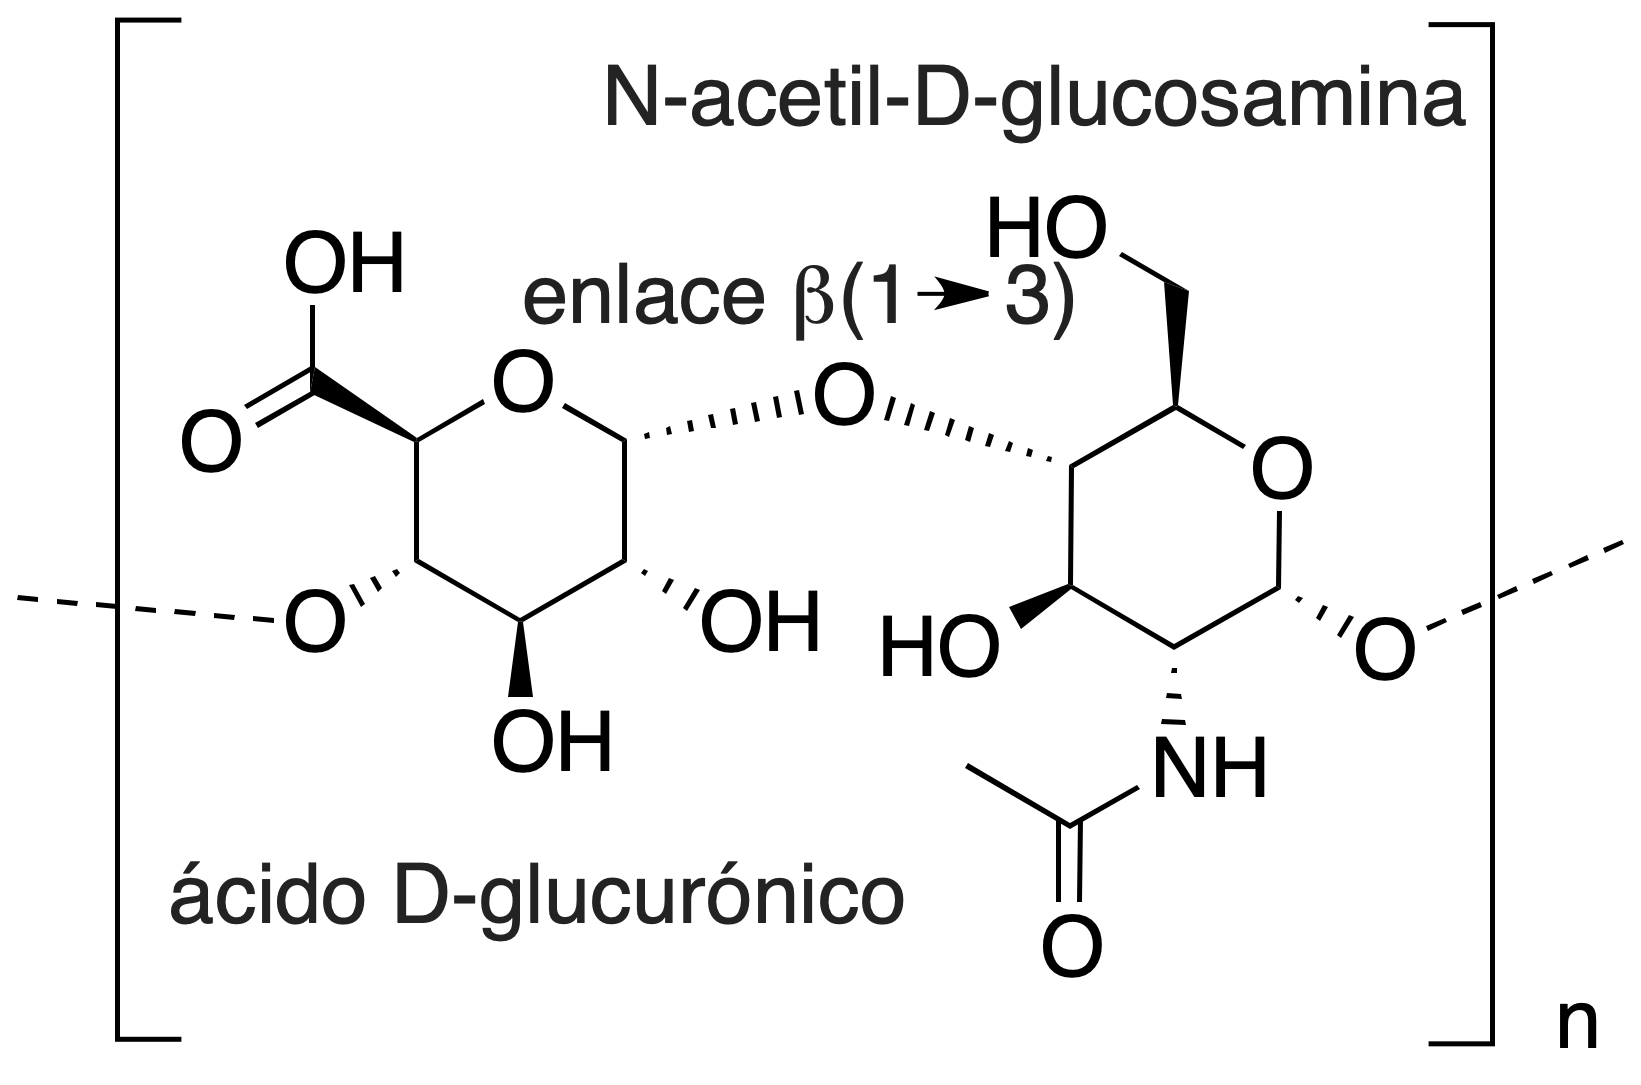 hyaluronic acid disaccharide D-glucuronic acid N-acetyl-D-glucosamine AEMOLEFTQBMNLQ-WAXACMCWBB OVRNDRQMDRJTHS-FMDGEEDCBL